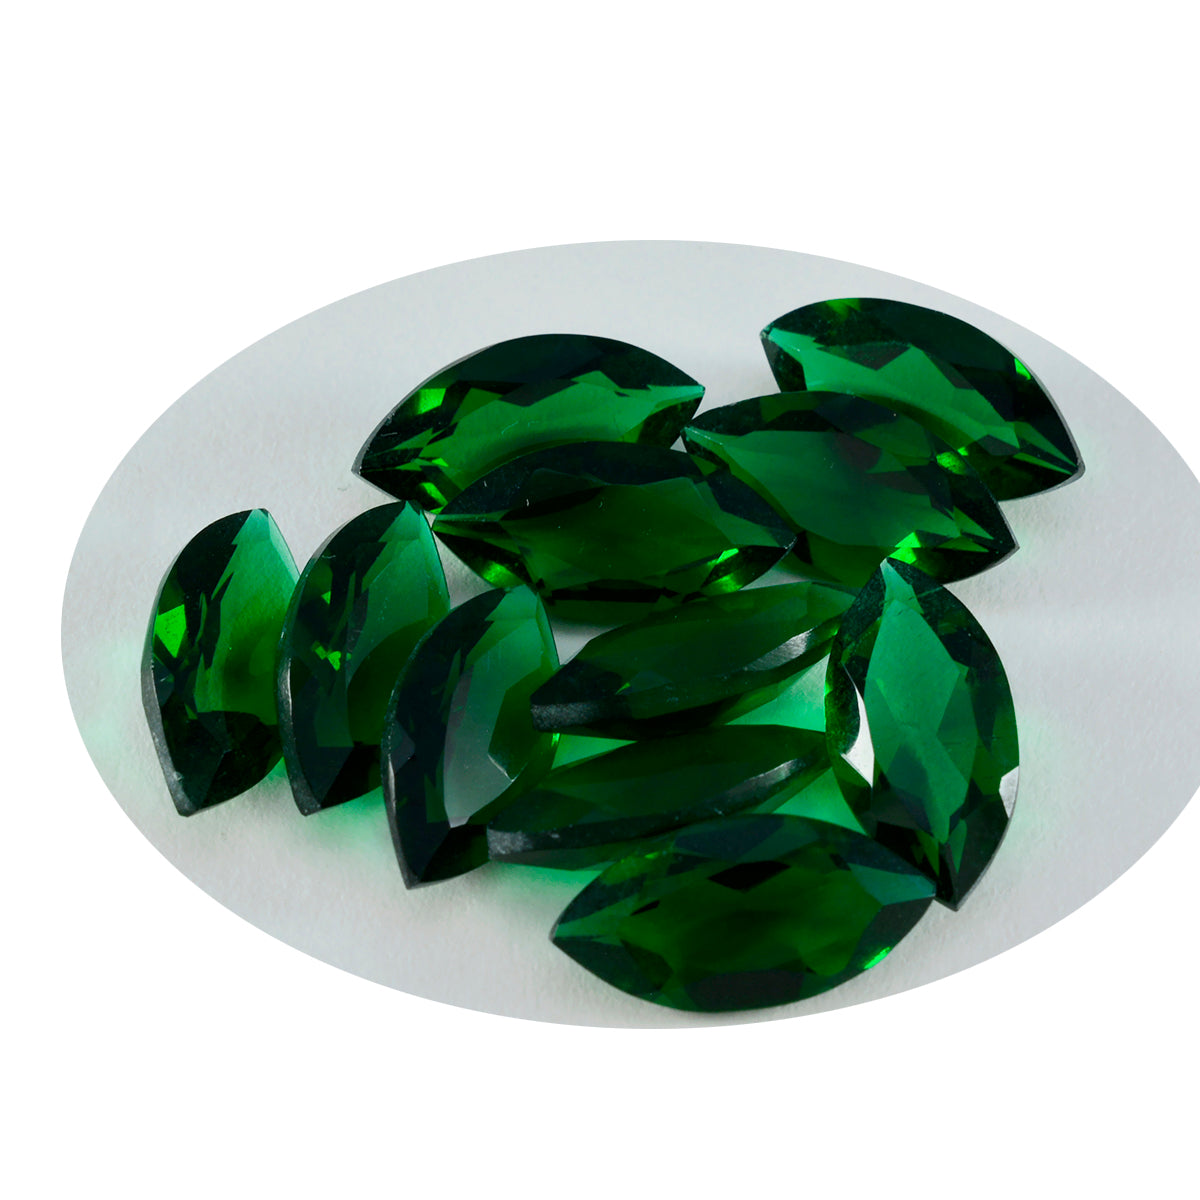 Riyogems 1 Stück grüner Smaragd, CZ, facettiert, 8 x 16 mm, Marquise-Form, A+1-Qualitätsedelsteine